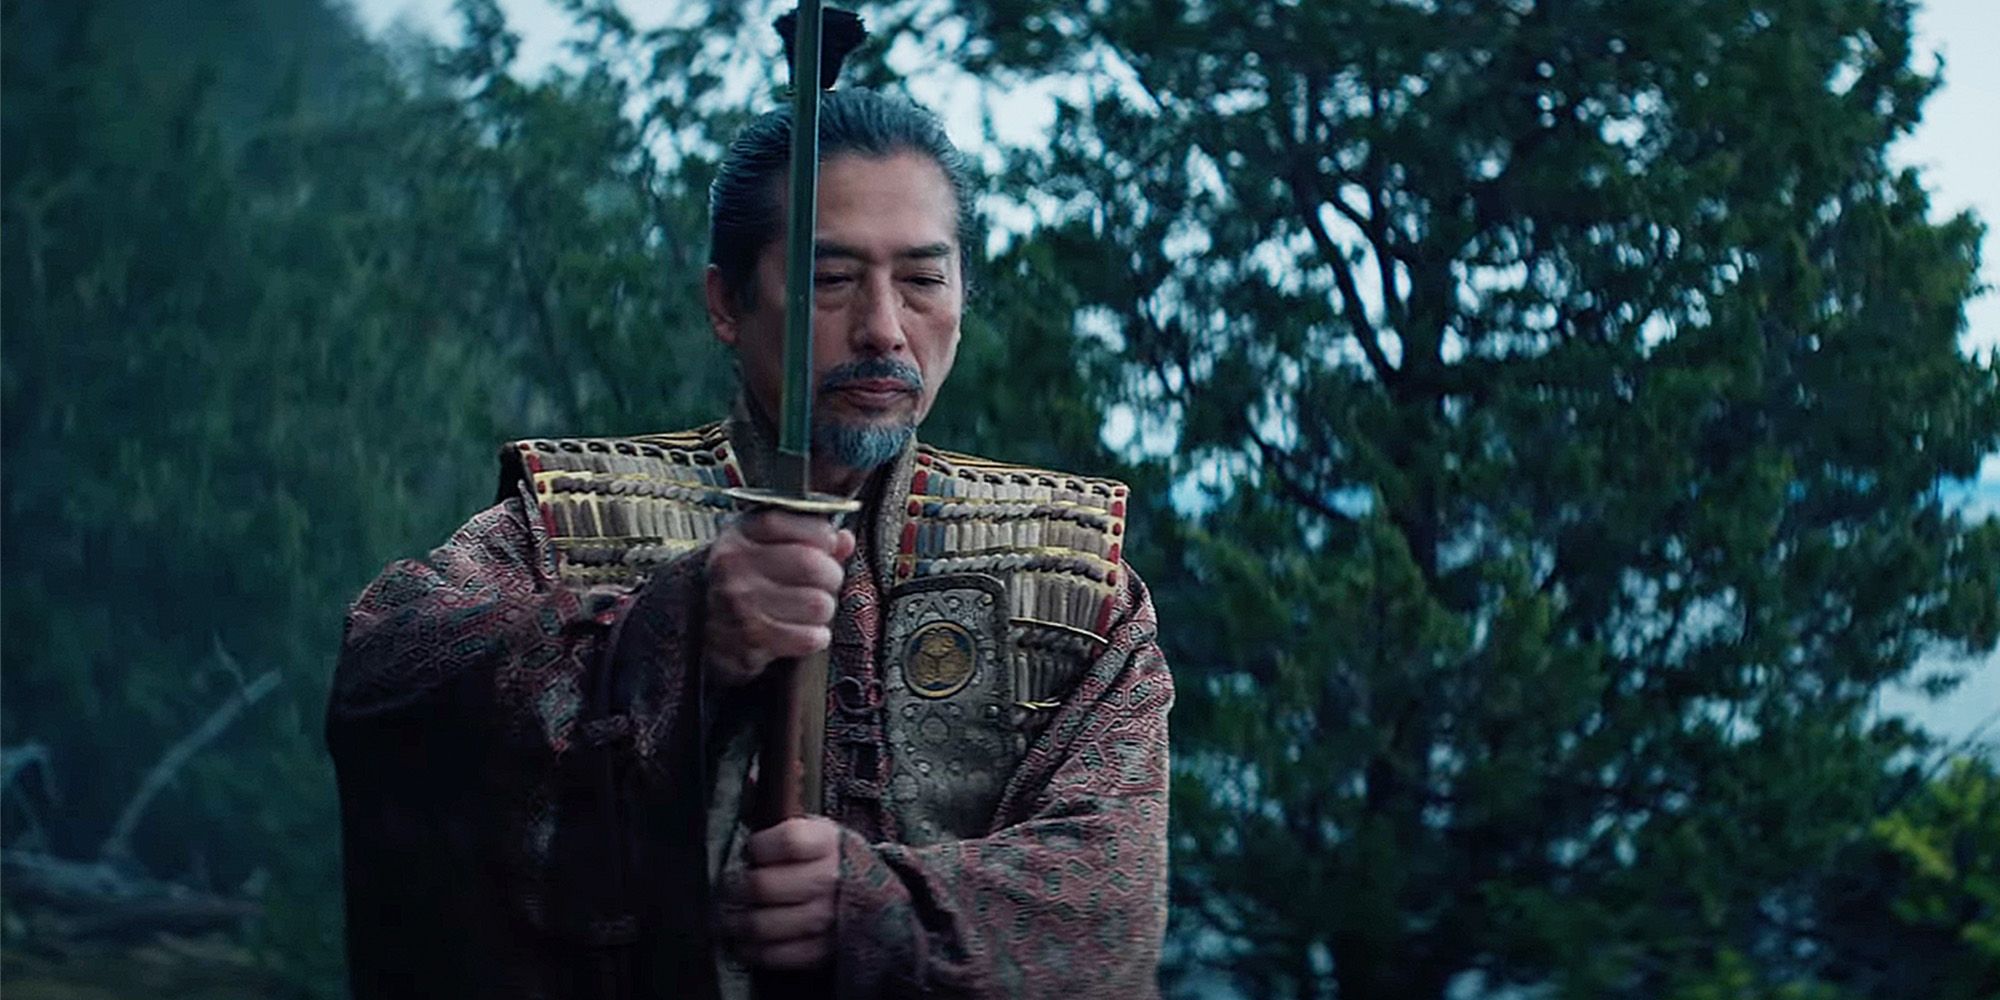 Hiroyuki Sanada empunhando uma espada como Toranaga no episódio 10 do Shogun